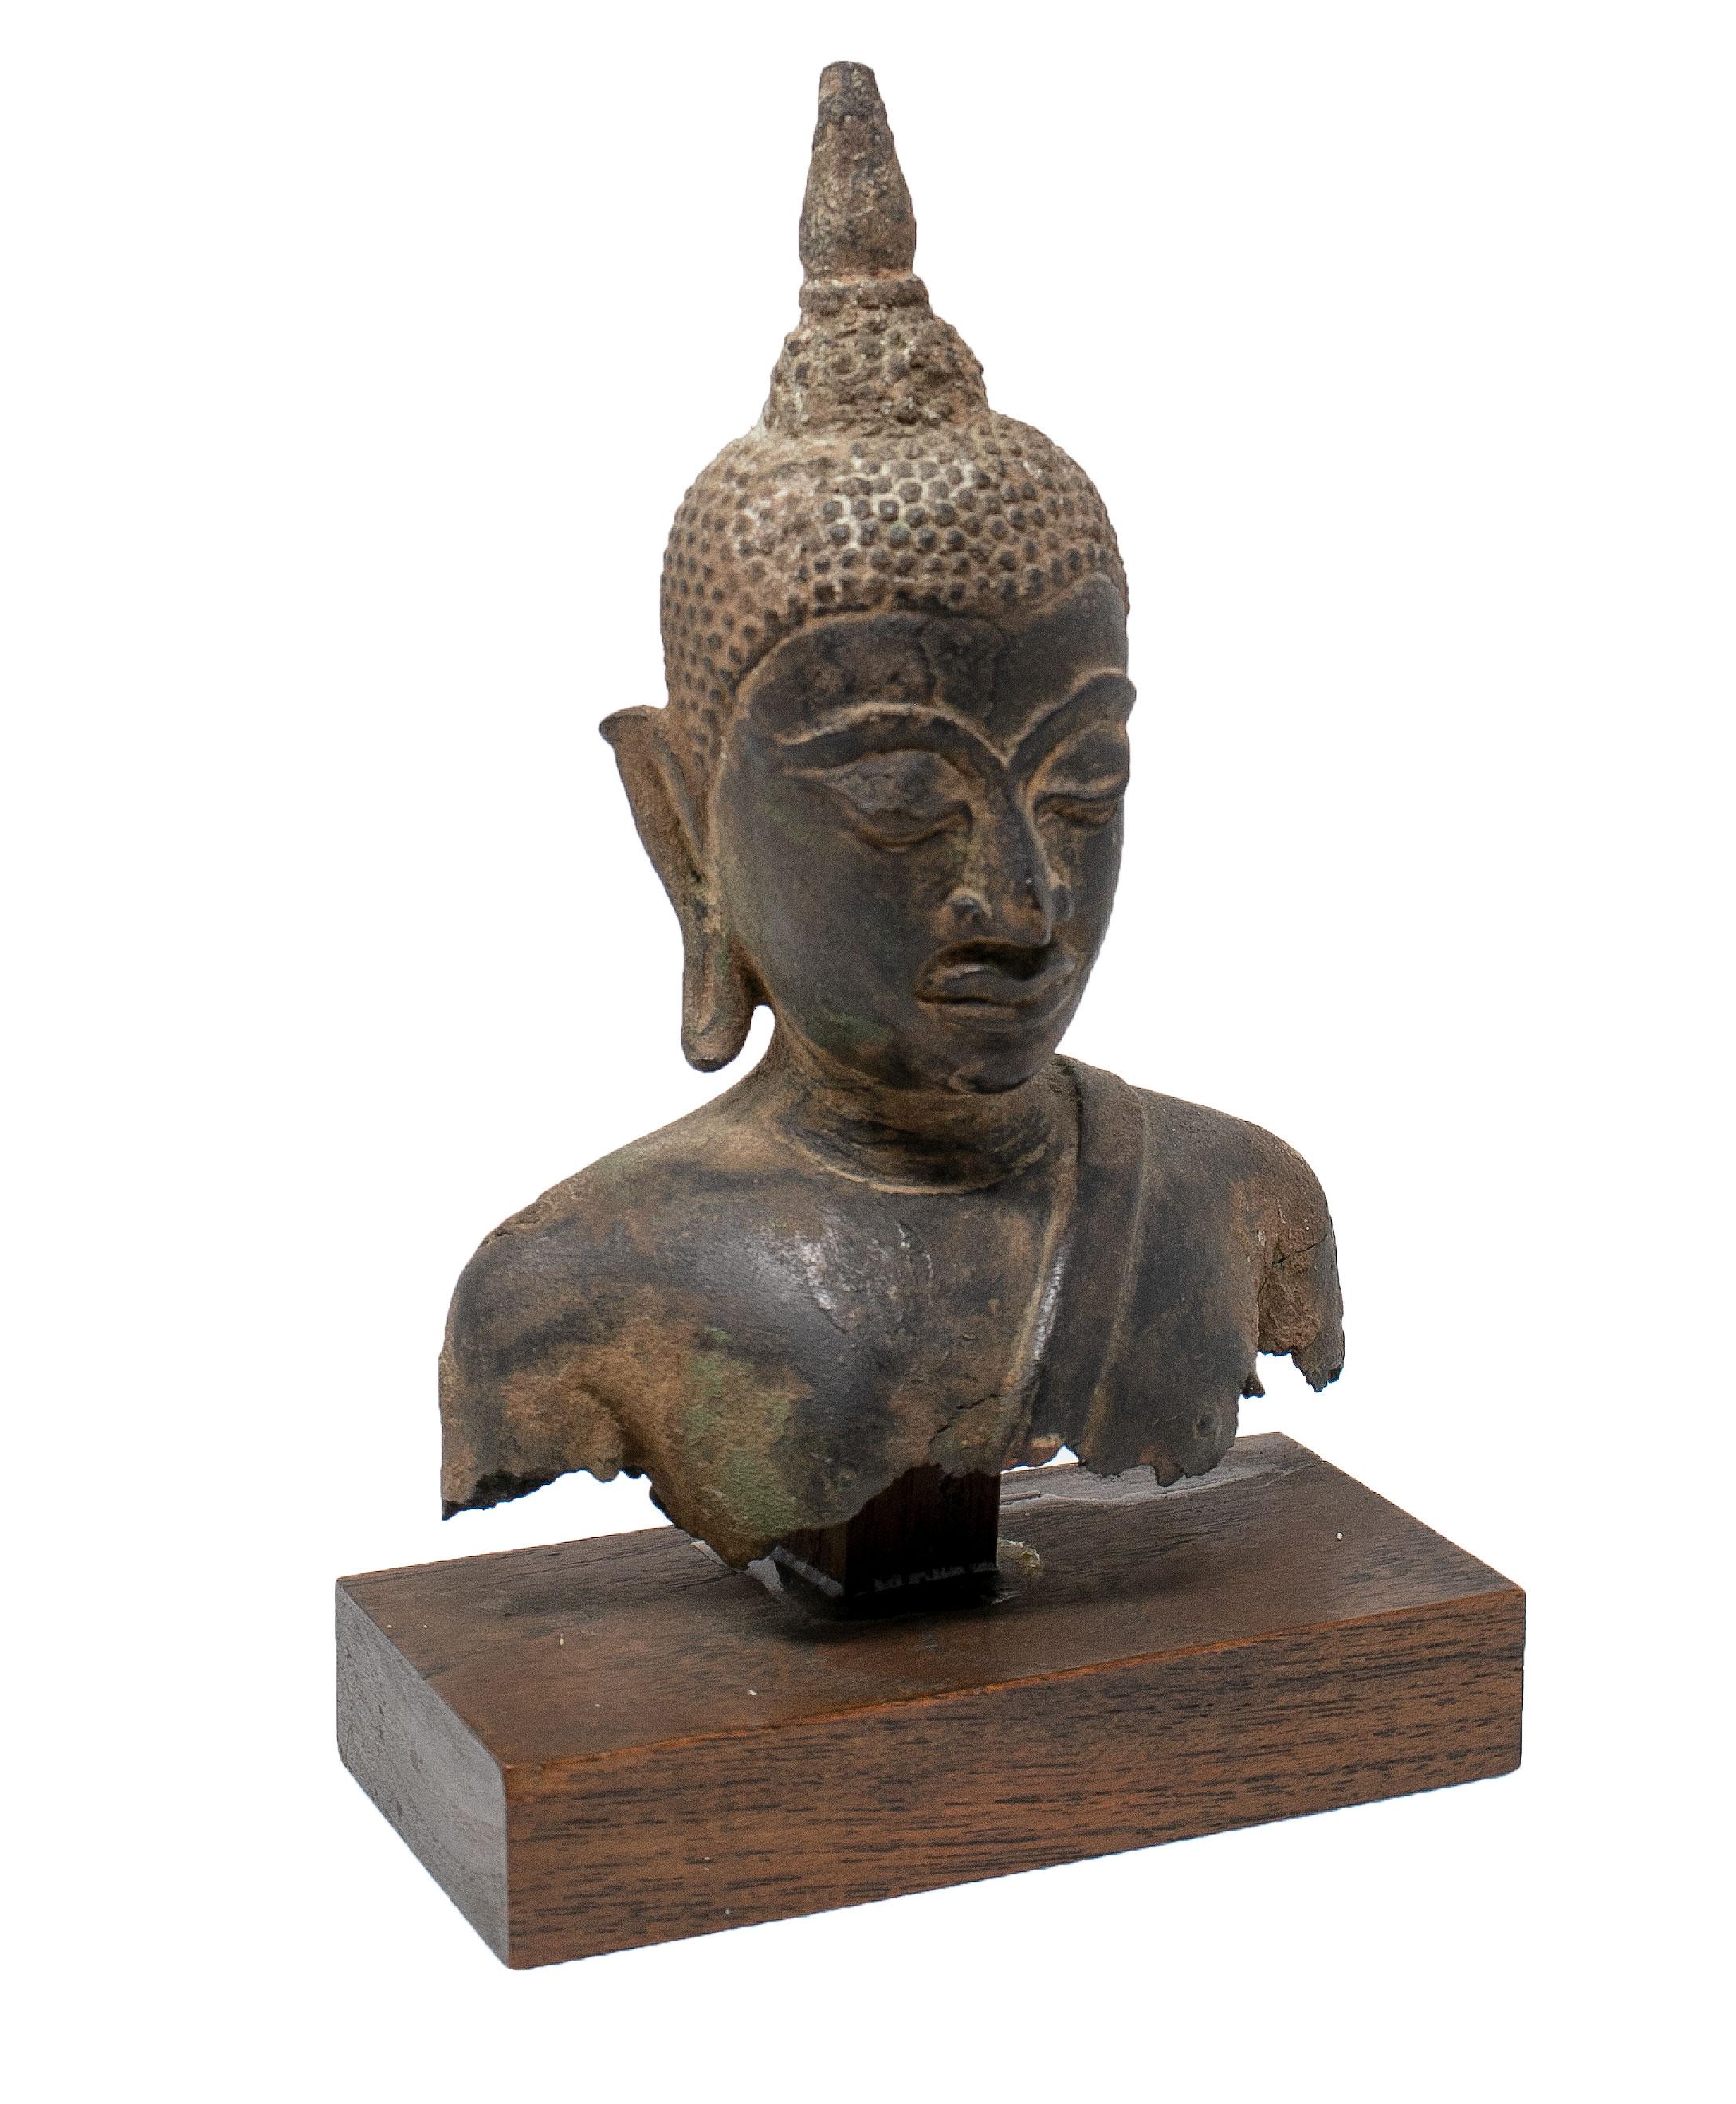 19th century Asian bronze Buddha torso on a wooden pedestal.